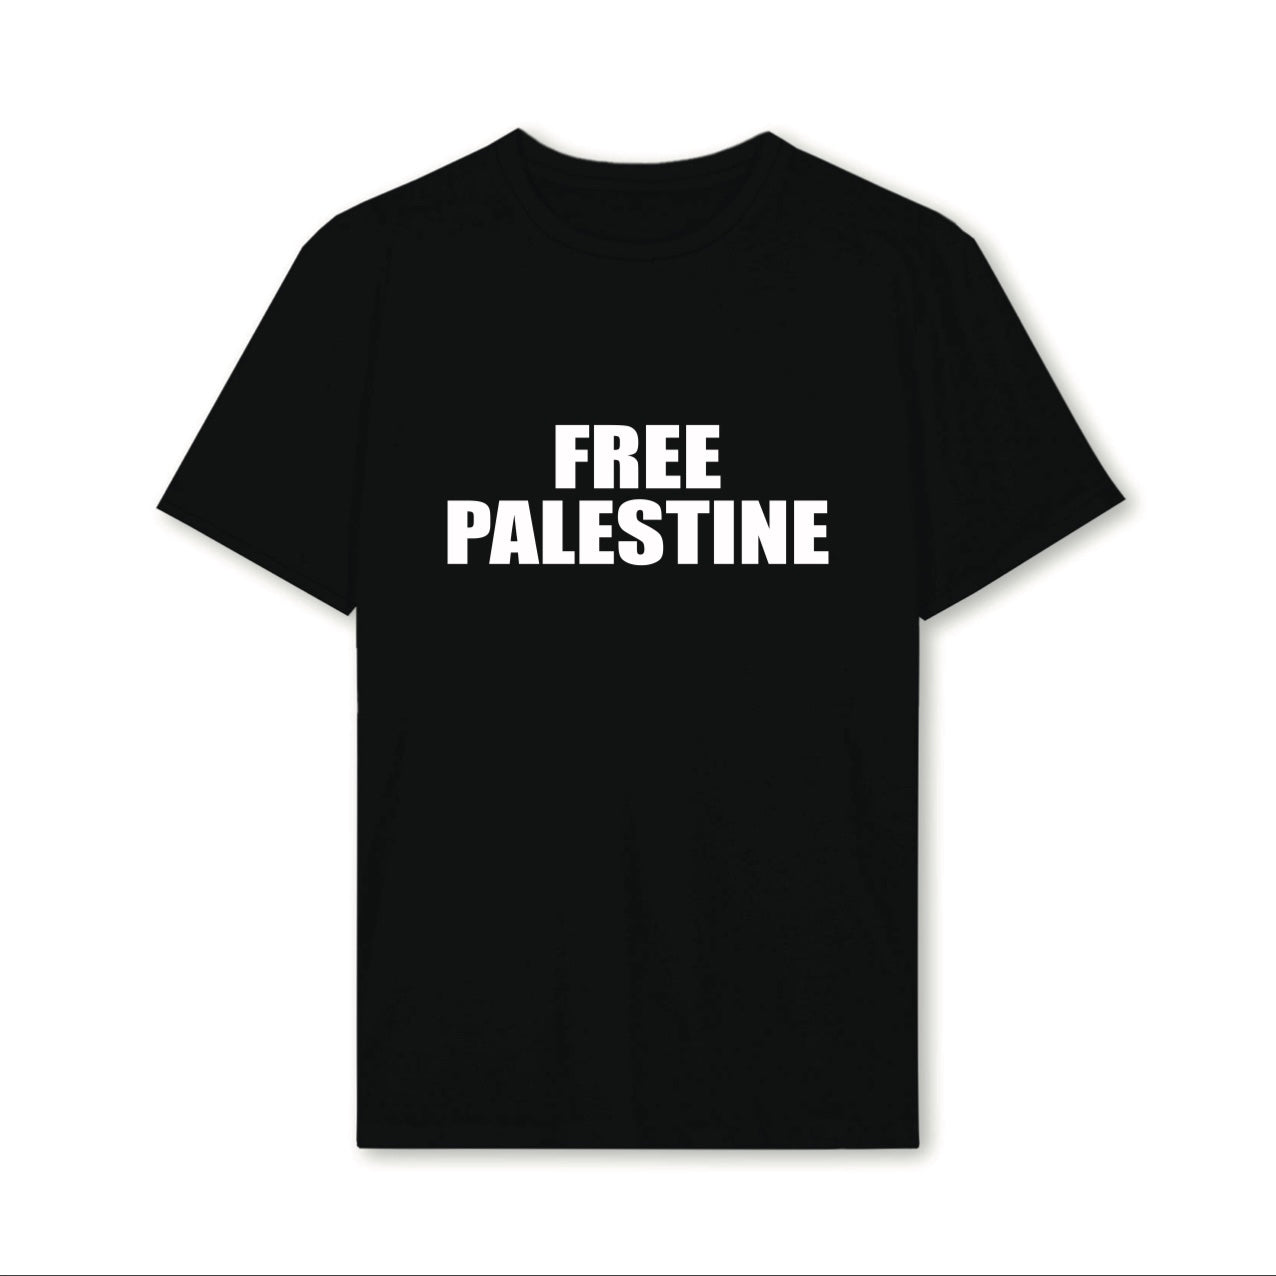 FREE PALESTINE Shirt (Black)